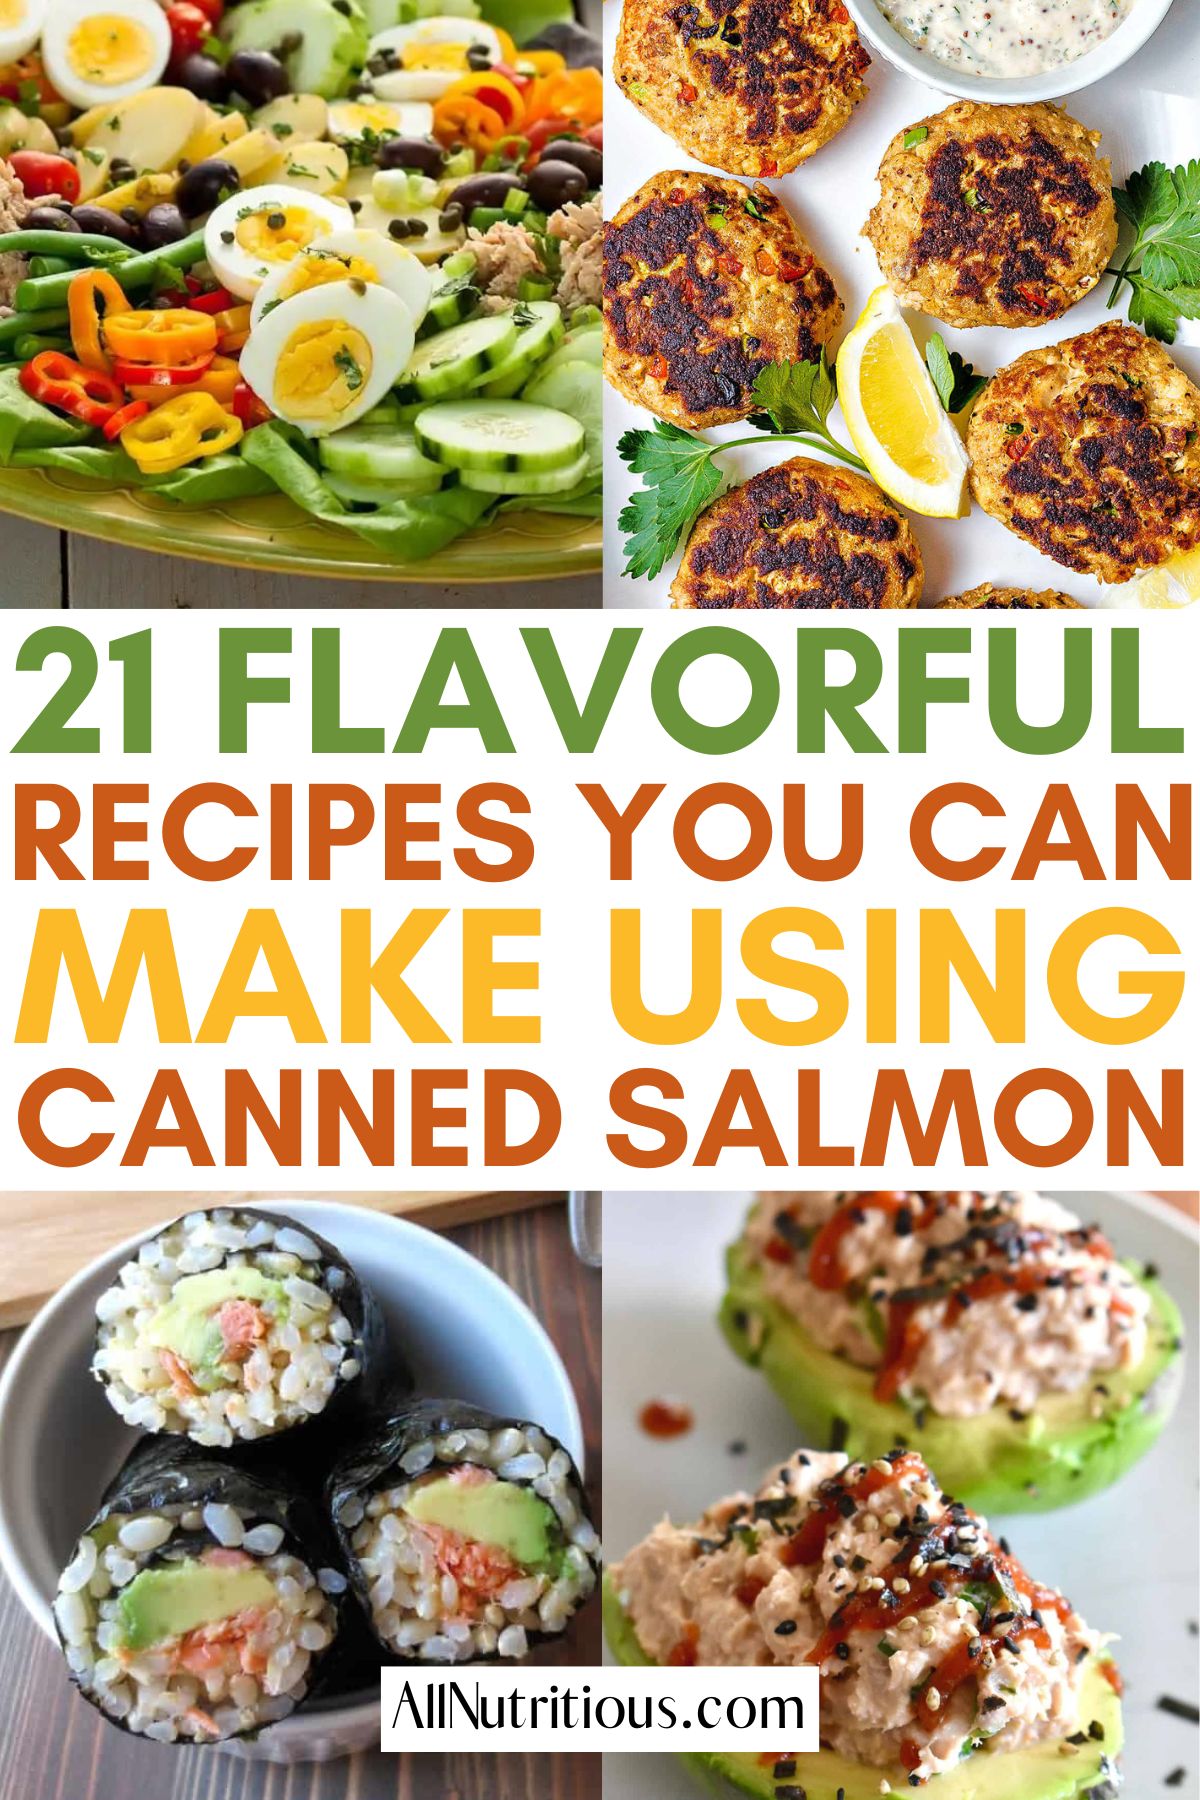 canned salmon recipe ideas